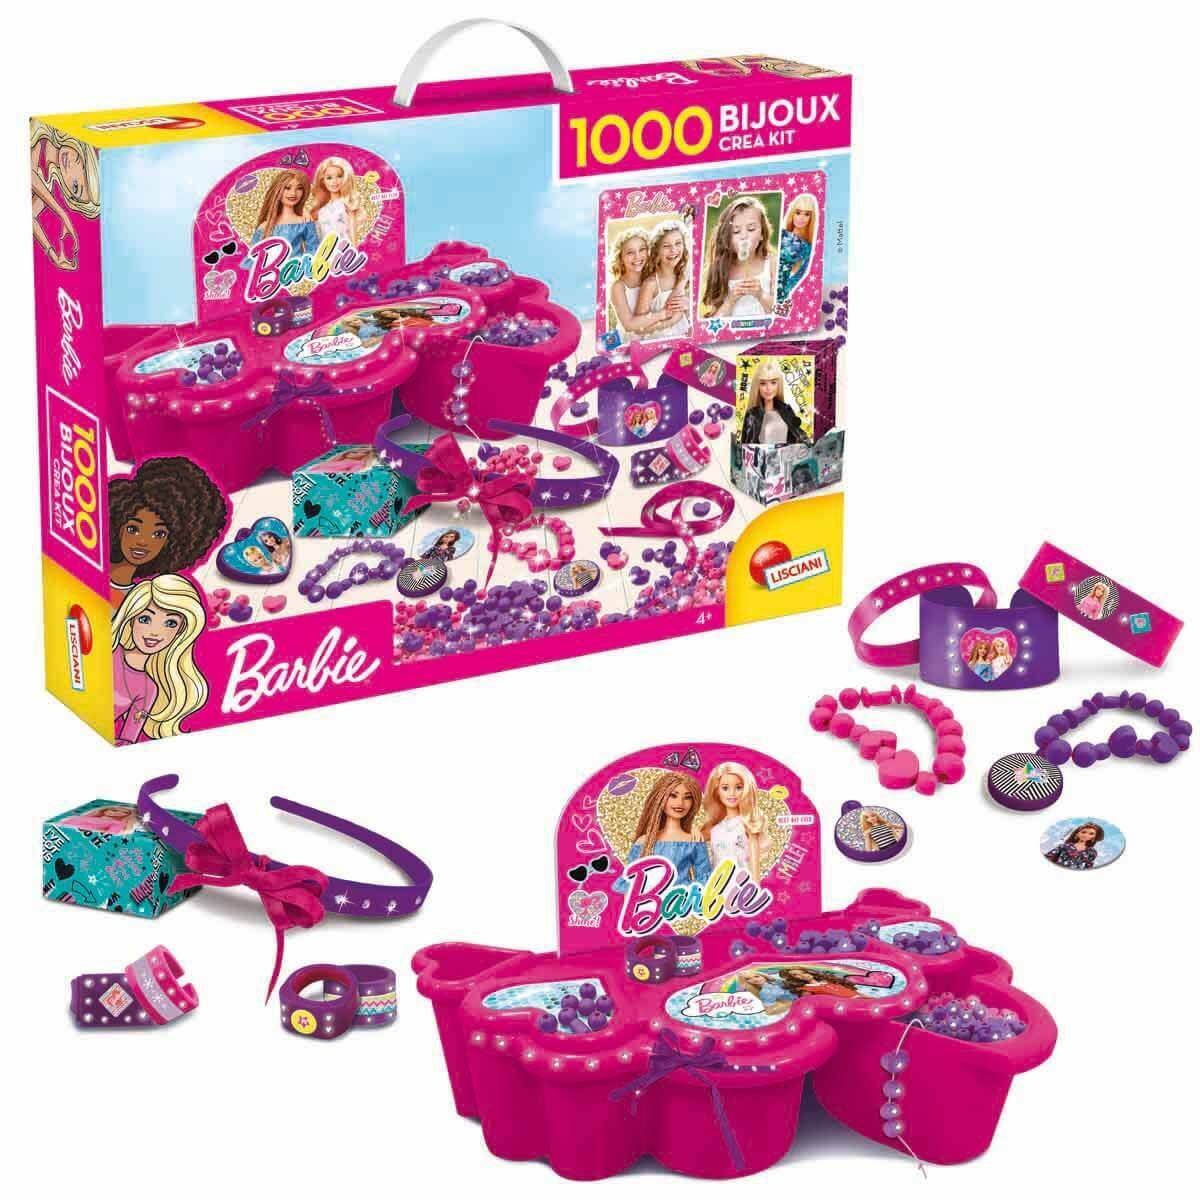 Sunman Barbie 1000 Bijoux Creative Kit S01007690